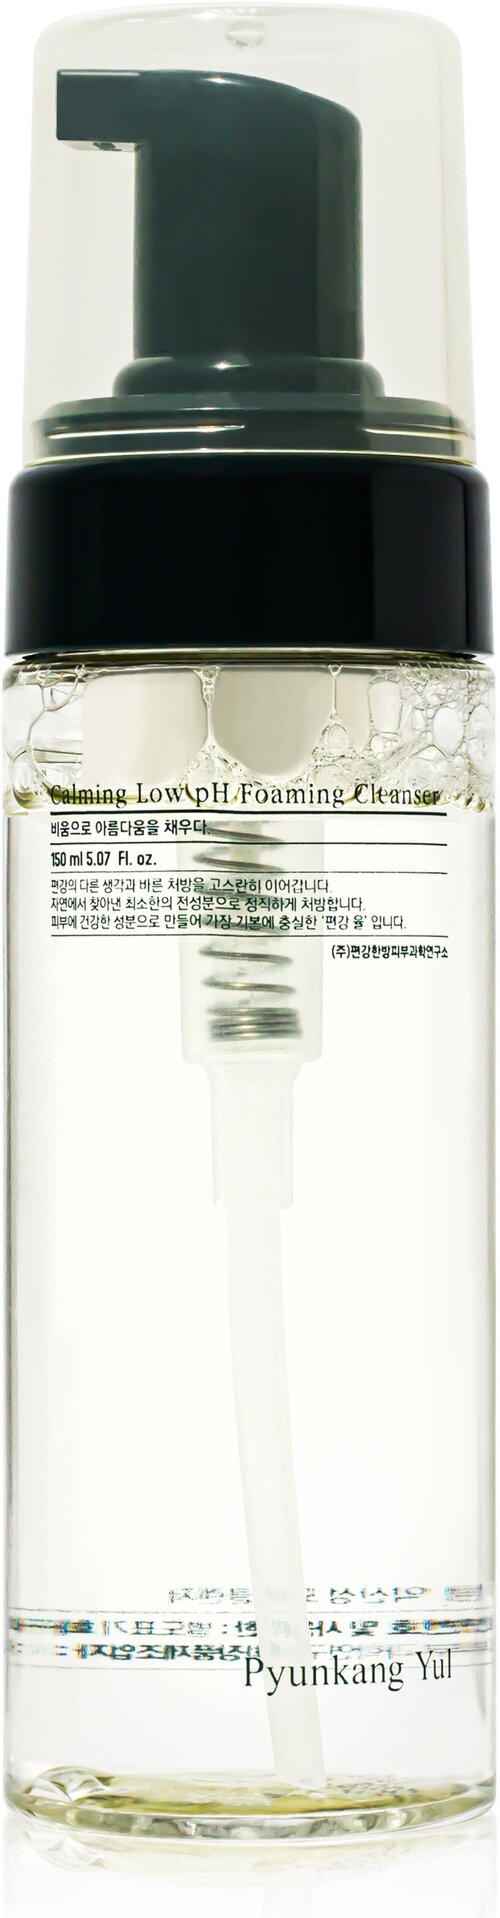 Пенка для умывания | Pyunkang Yul Calming Low pH Foaming Cleanser 150ml